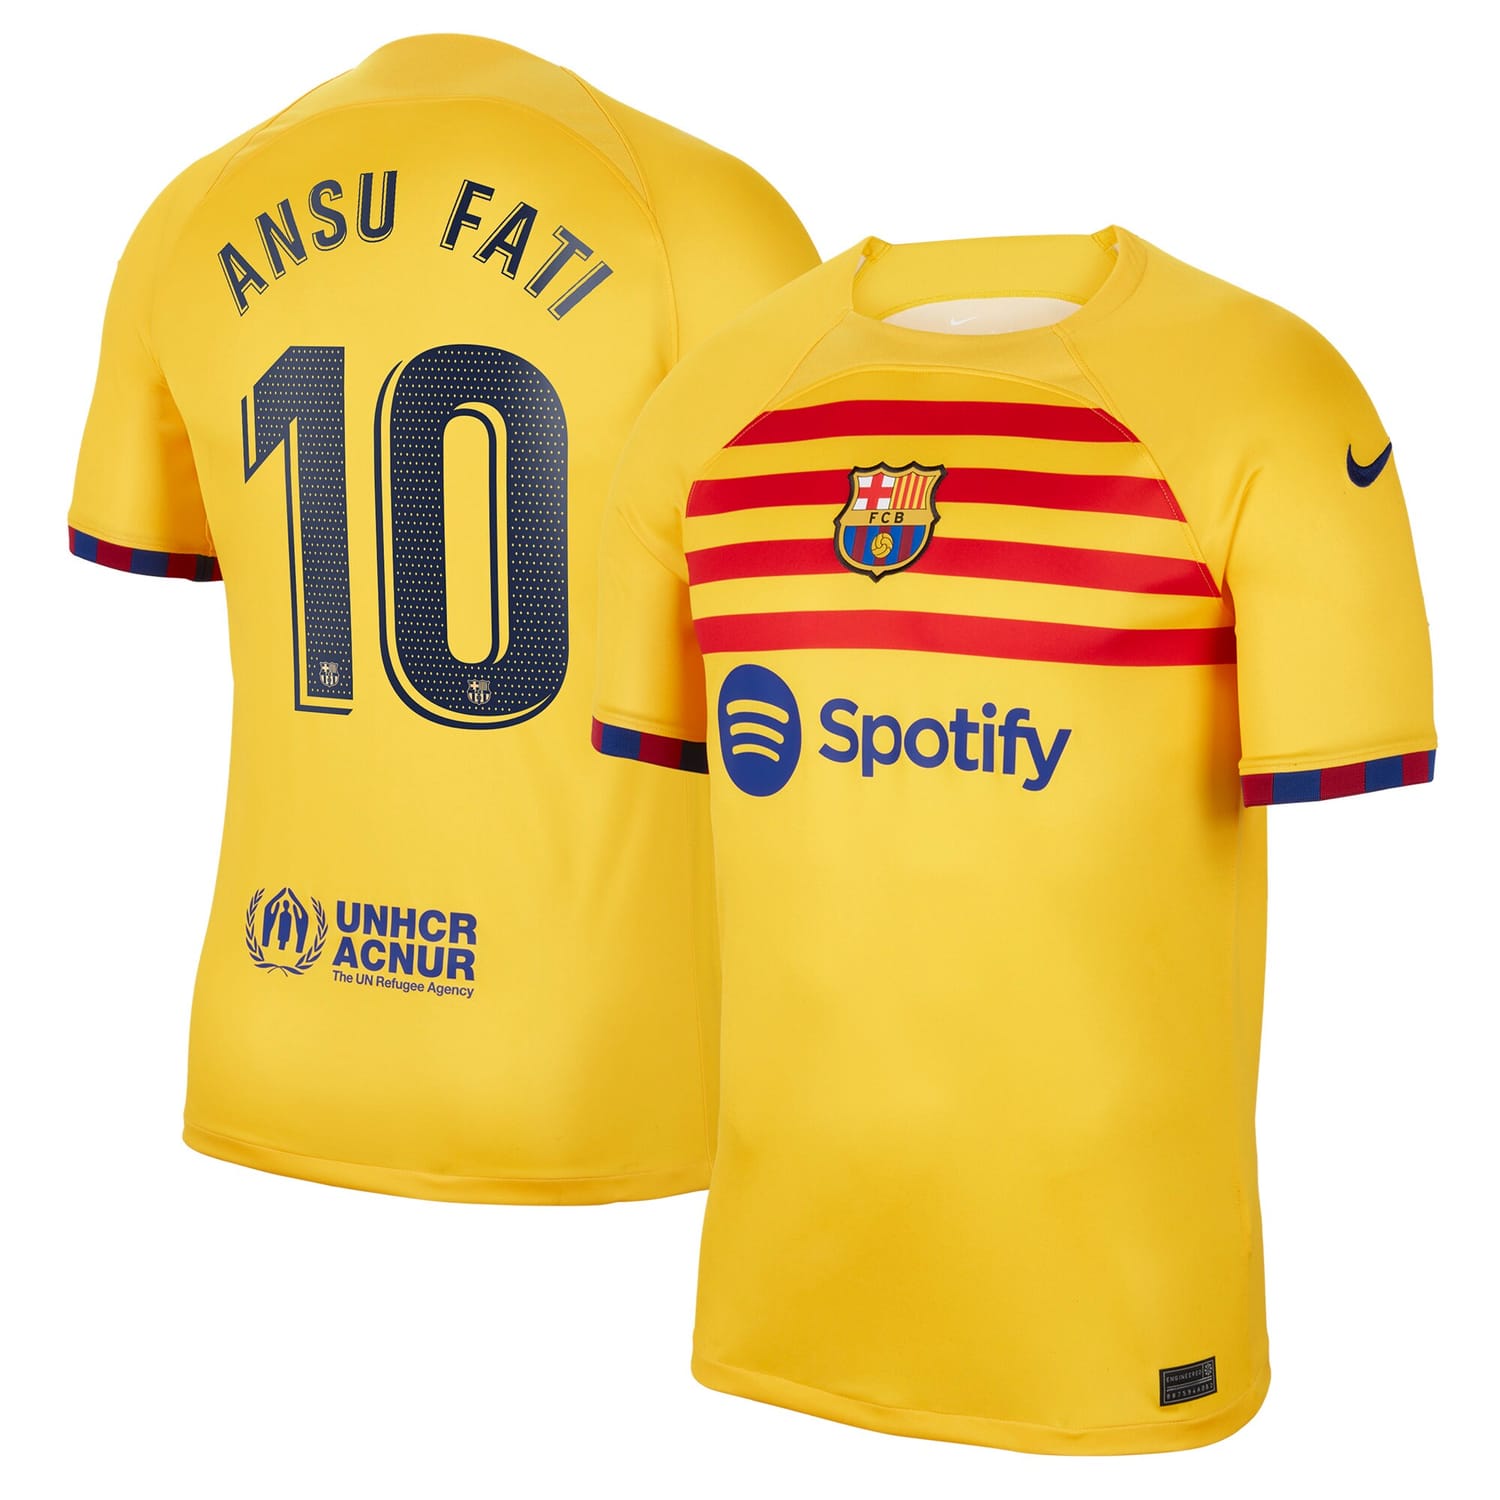 La Liga Barcelona Fourth Jersey Shirt Yellow 2022-23 player Ansu Fati printing for Men